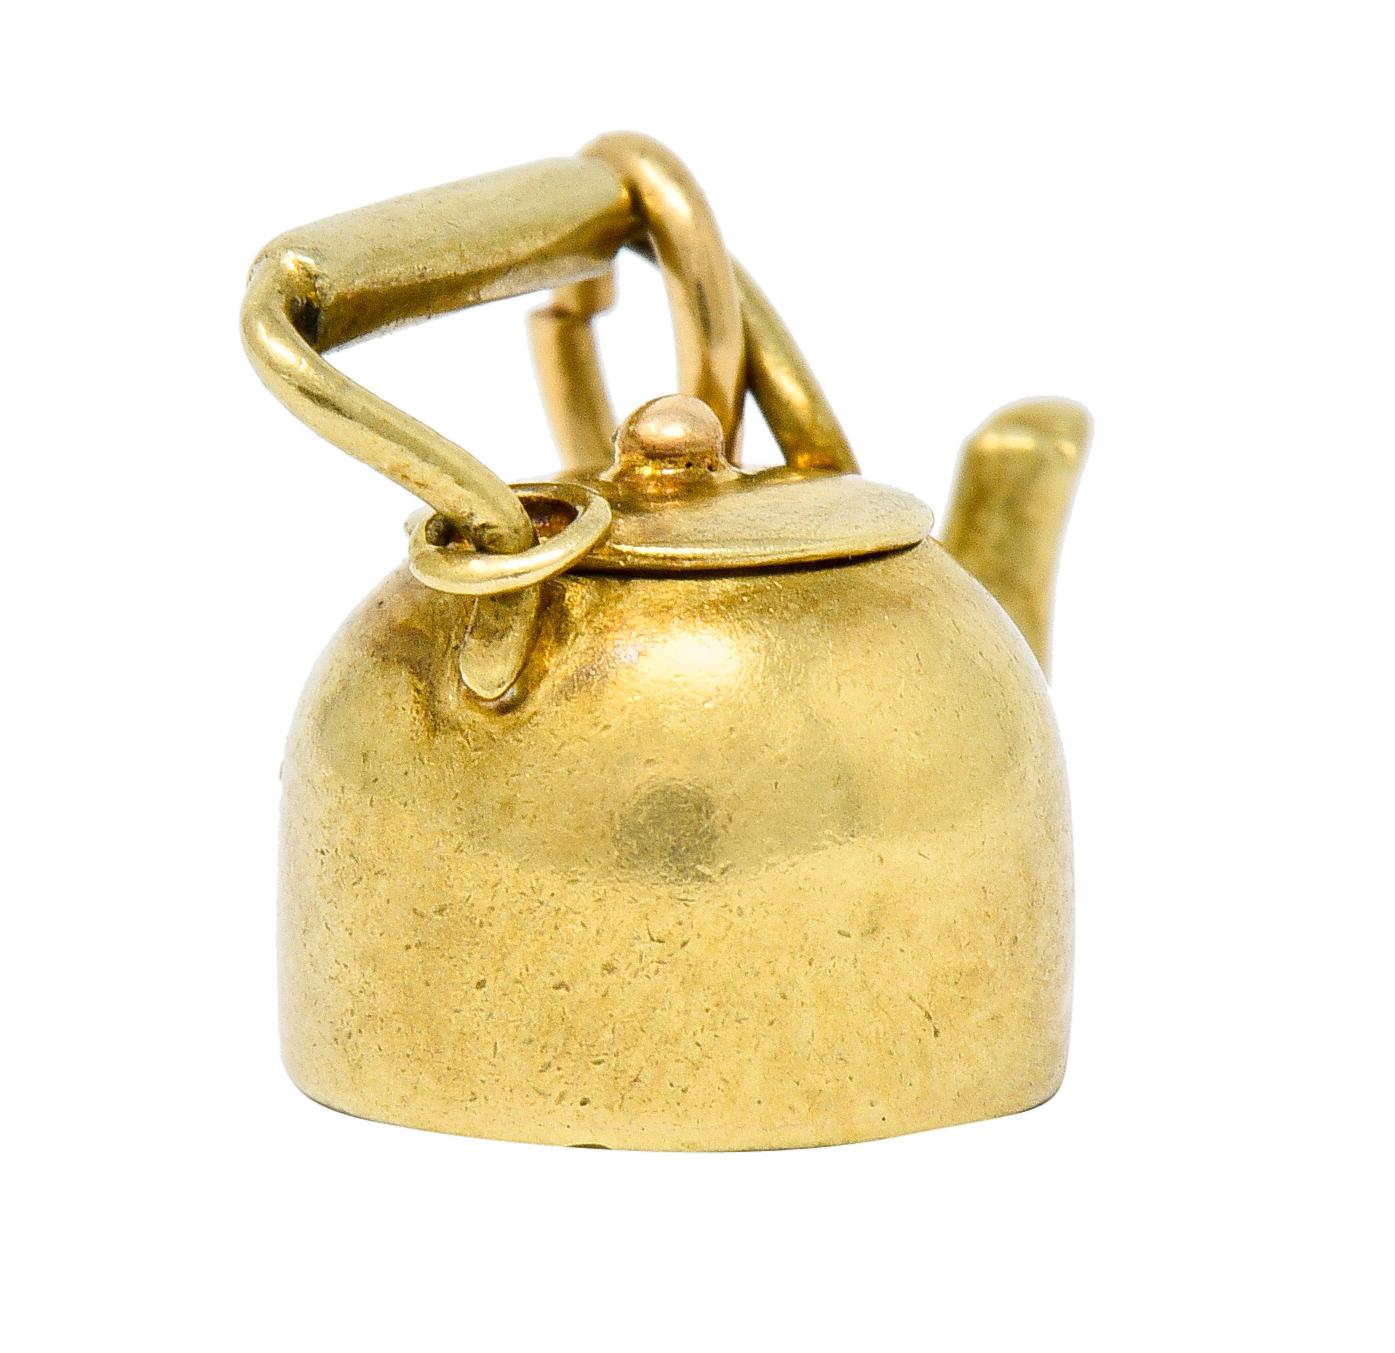 Sloan & Co. Art Nouveau 14 Karat Gold Tea Kettle Charm 2